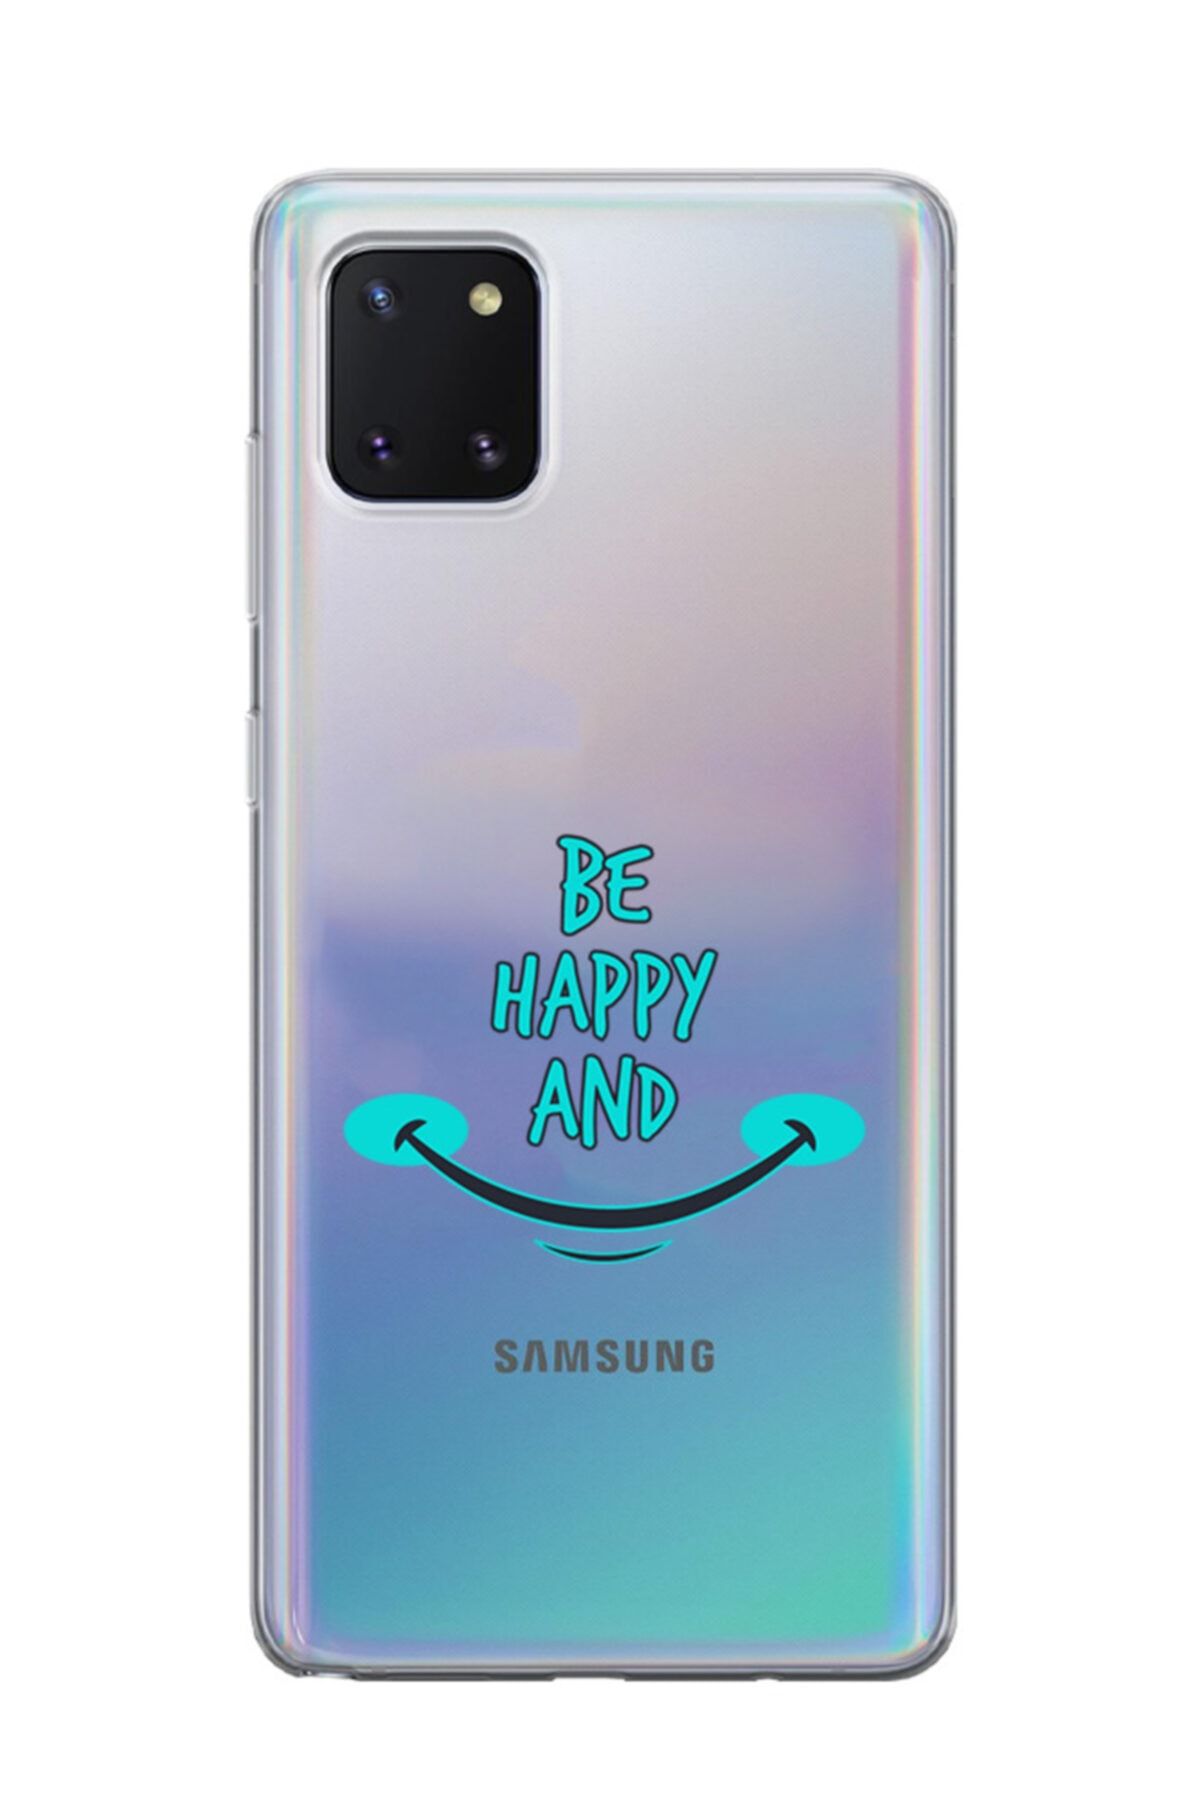 Dafhi Aksesuar Dafhi Samsung Galaxy Note 10 Lite Be Happy And Telefon Kılıfı